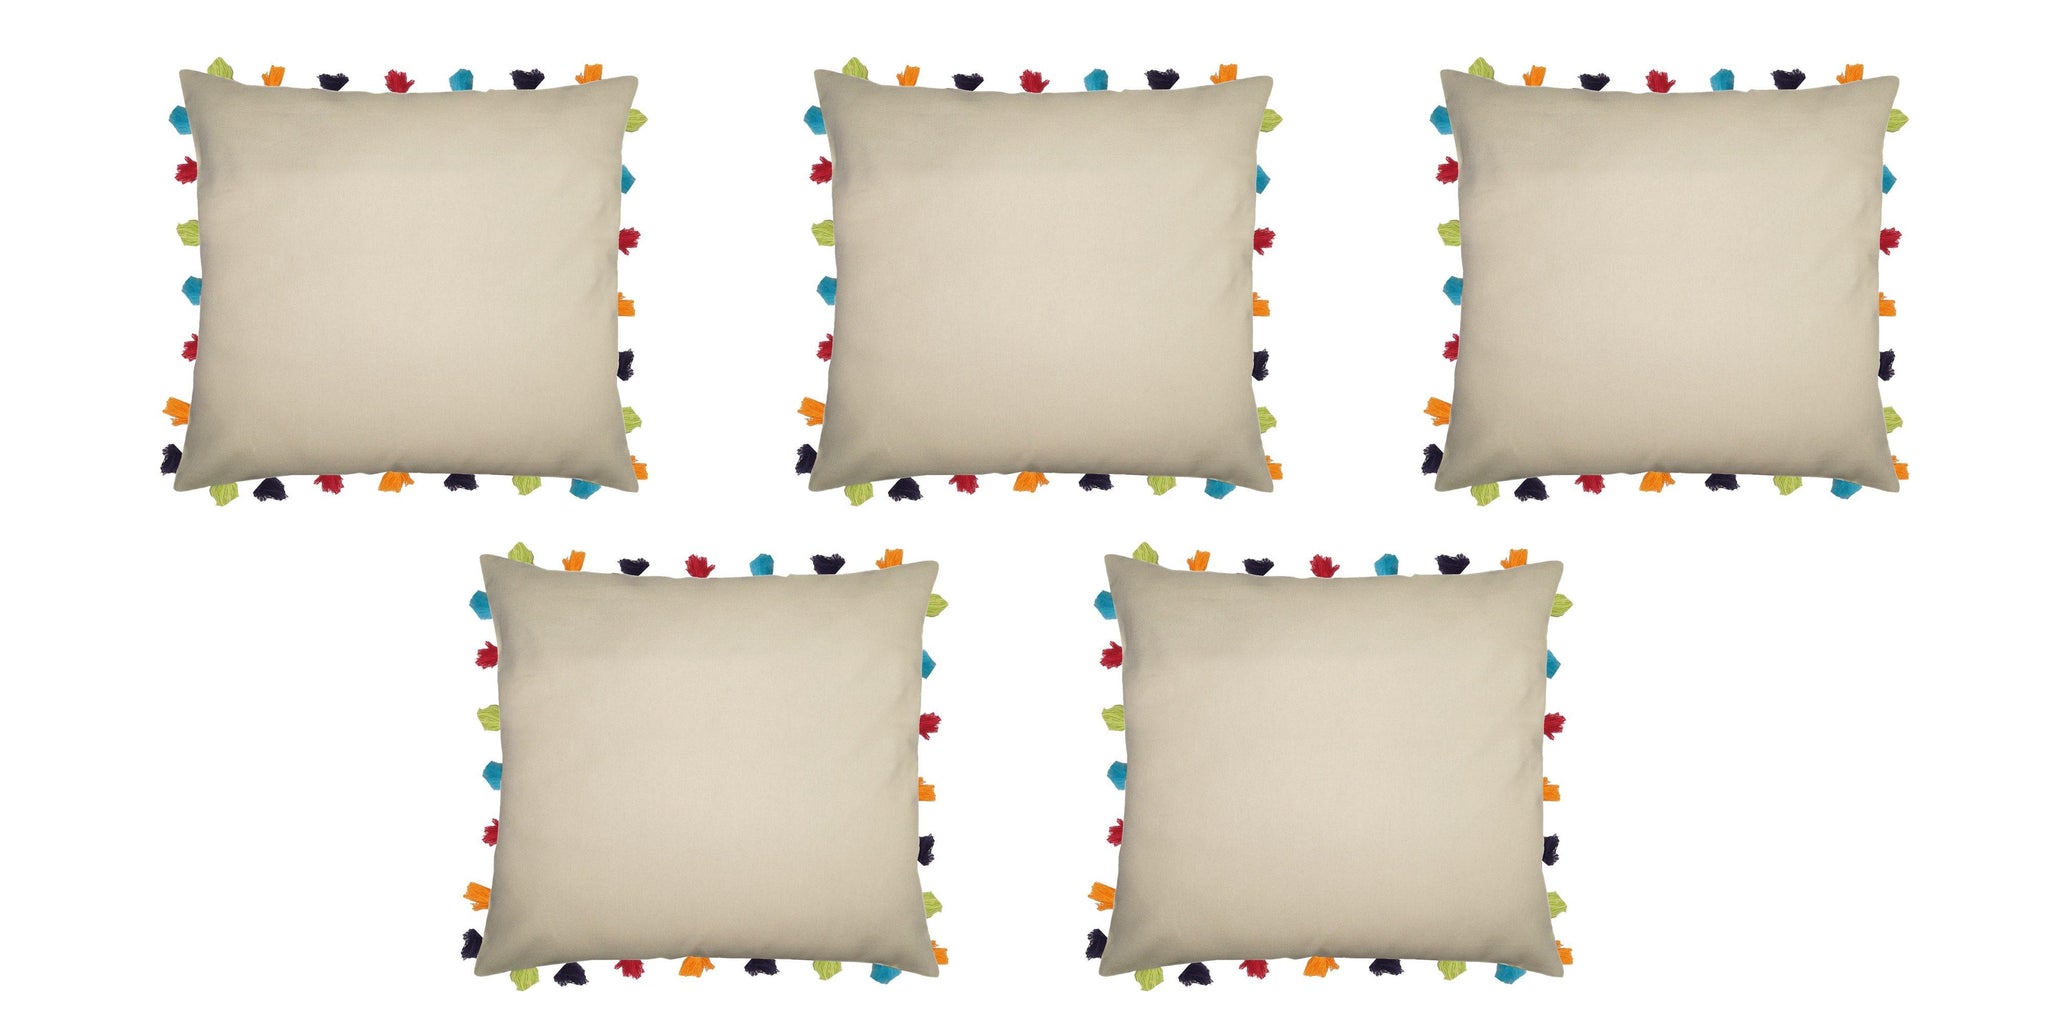 Lushomes Ecru Cushion Cover with Colorful tassels (5 pcs, 20 x 20”) - Lushomes